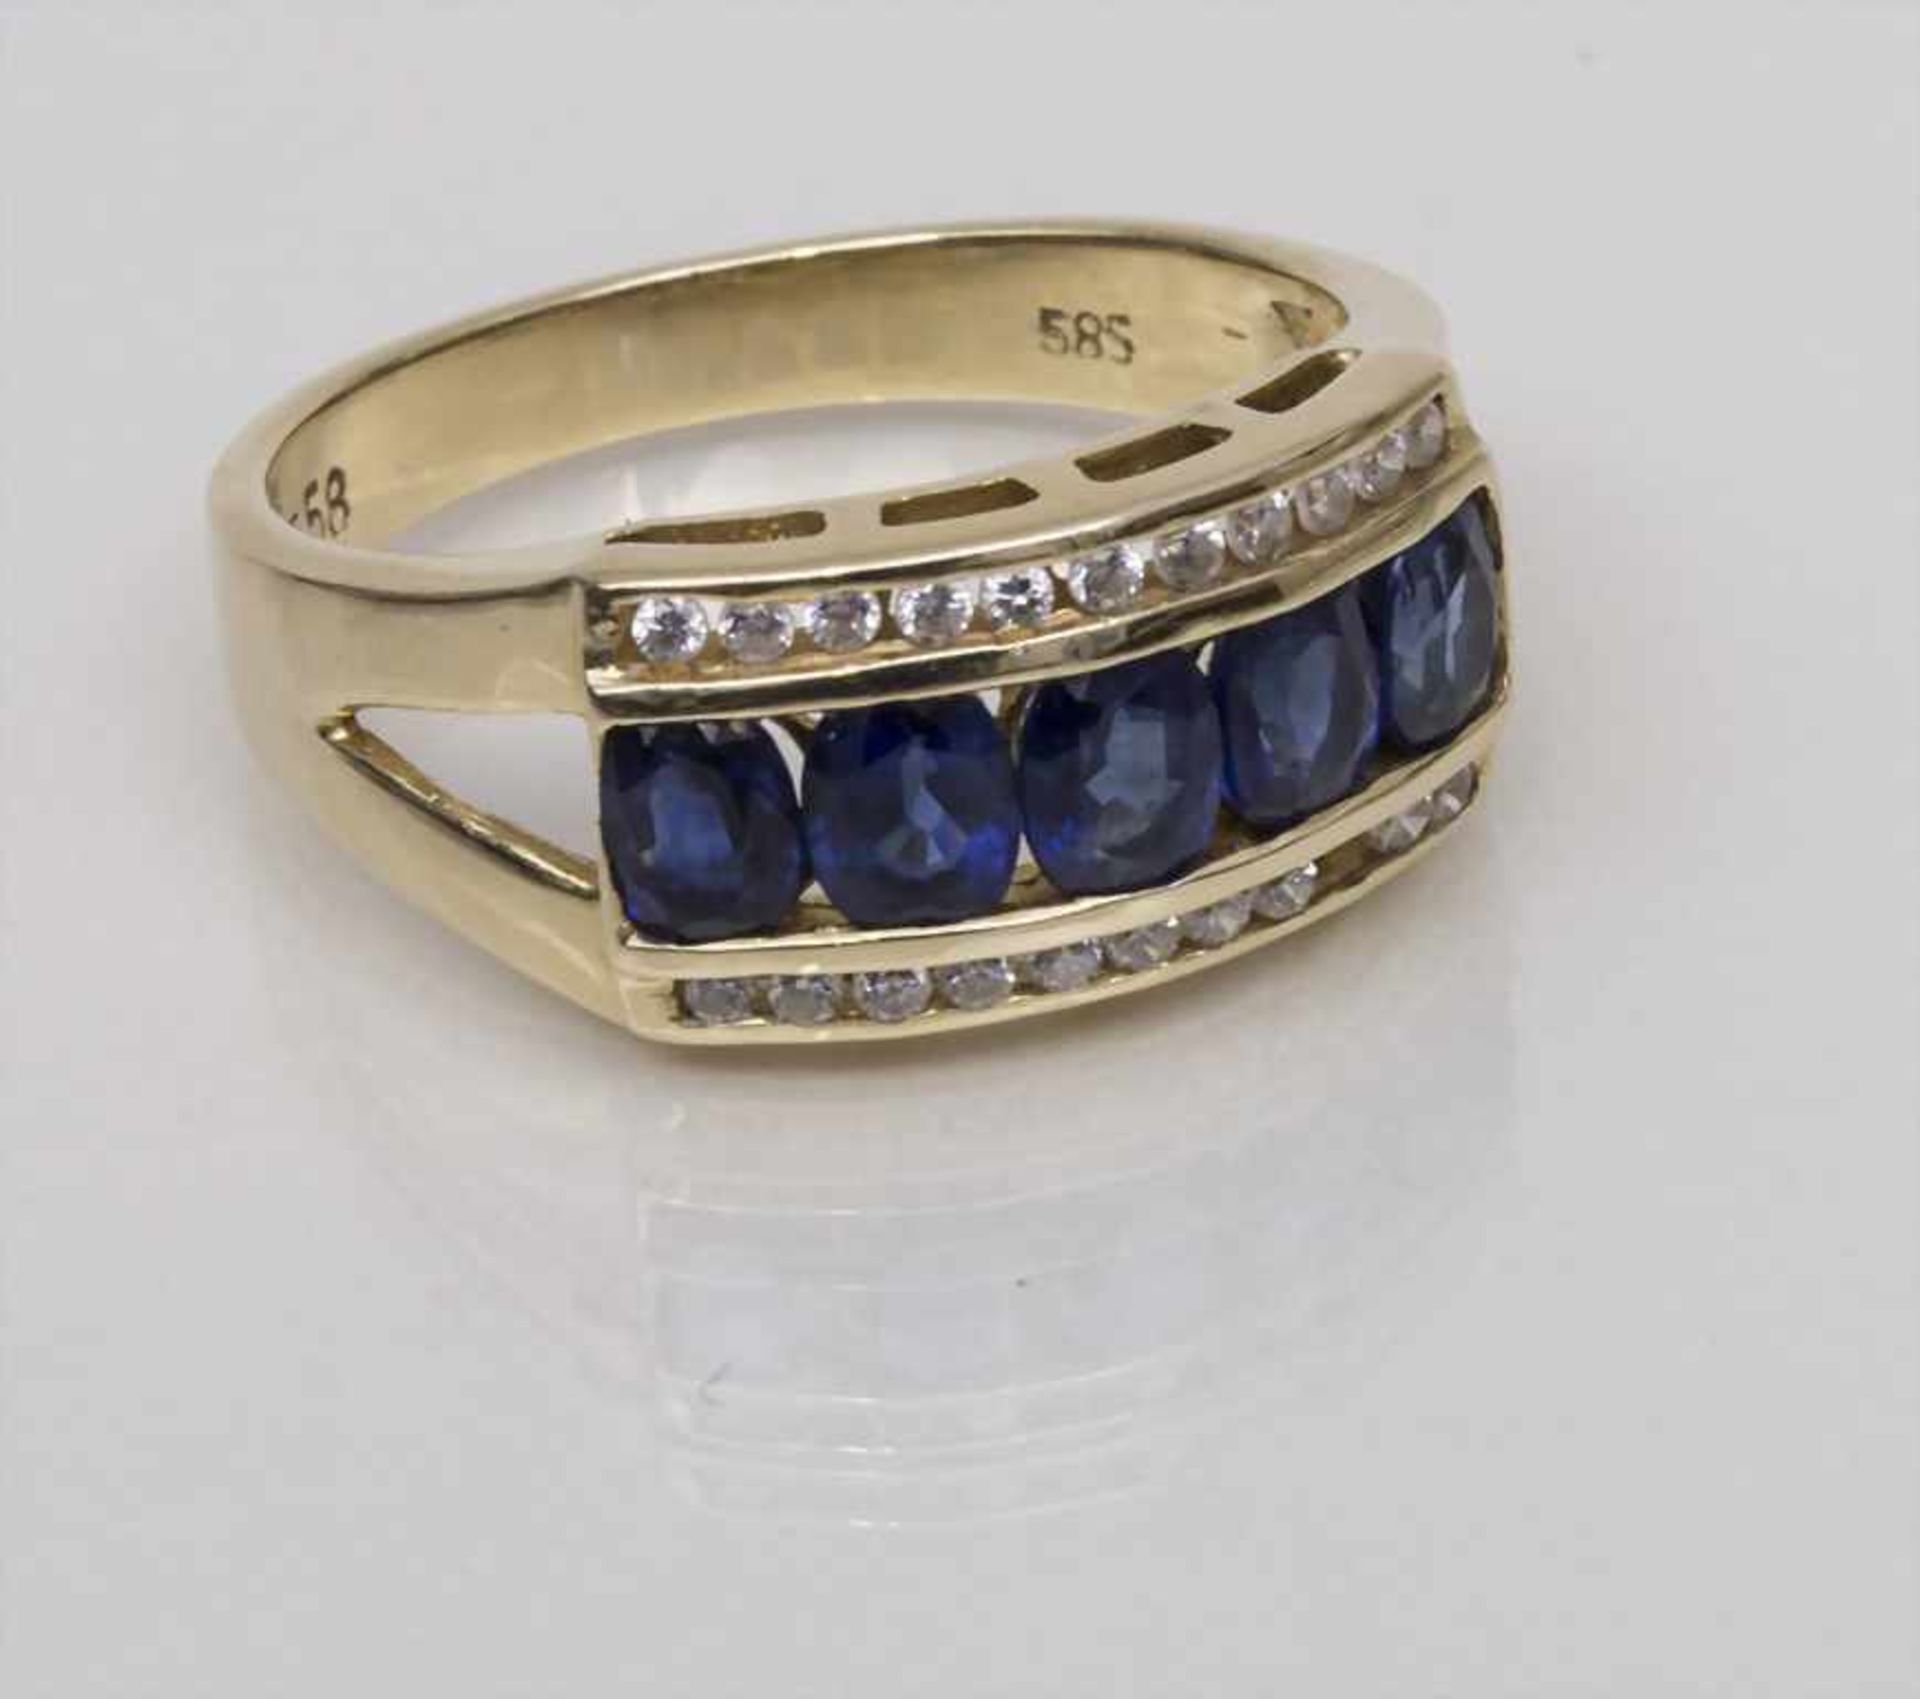 Saphir-Damenring / A sapphire ladies ring Material: Gelbgold 585/000 14 Kt, 5 Saphire, Ringgröße: